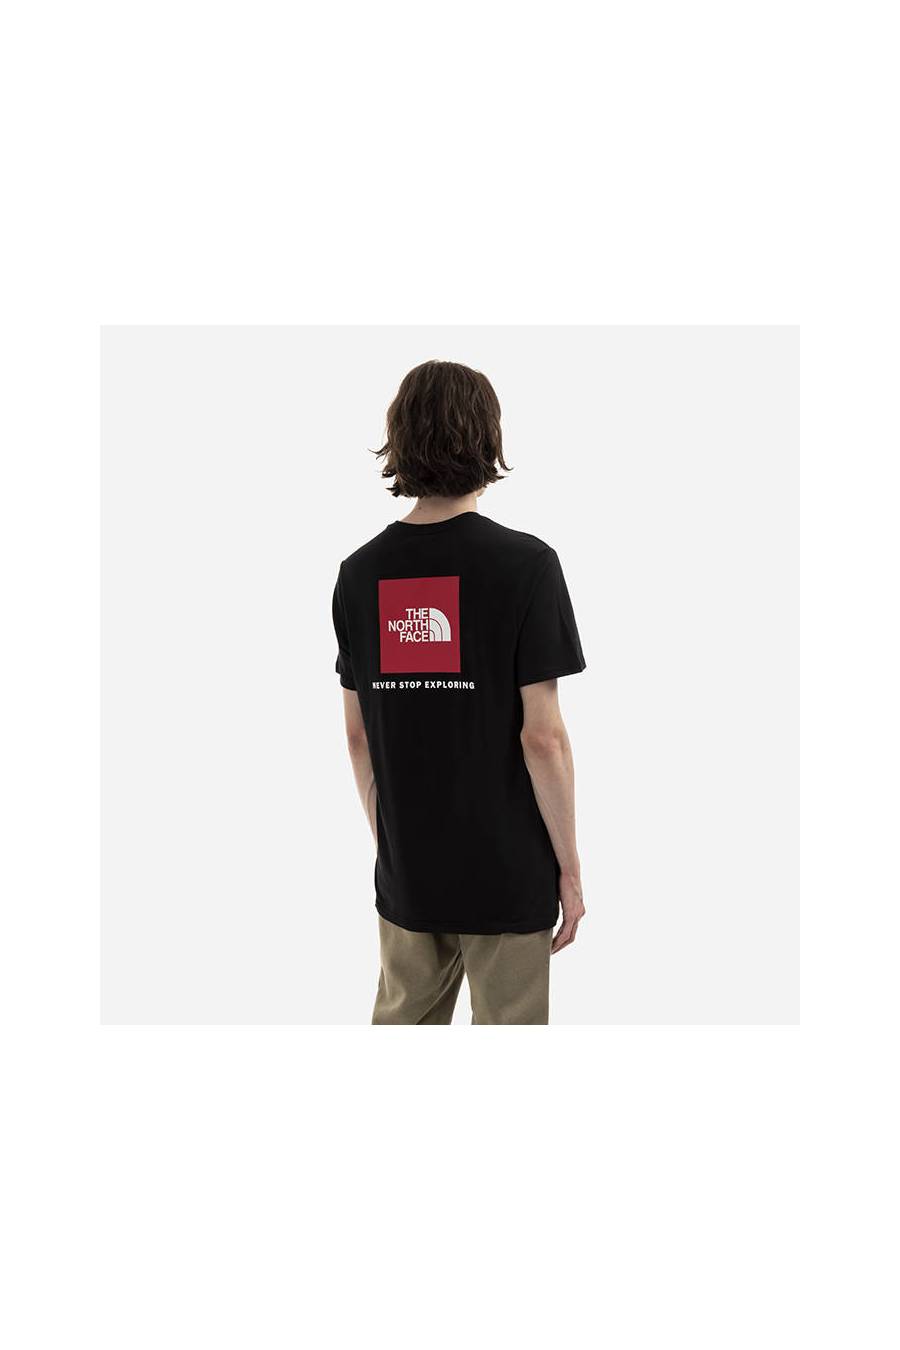 Camiseta The North Face Red Box T92TX2-JK3